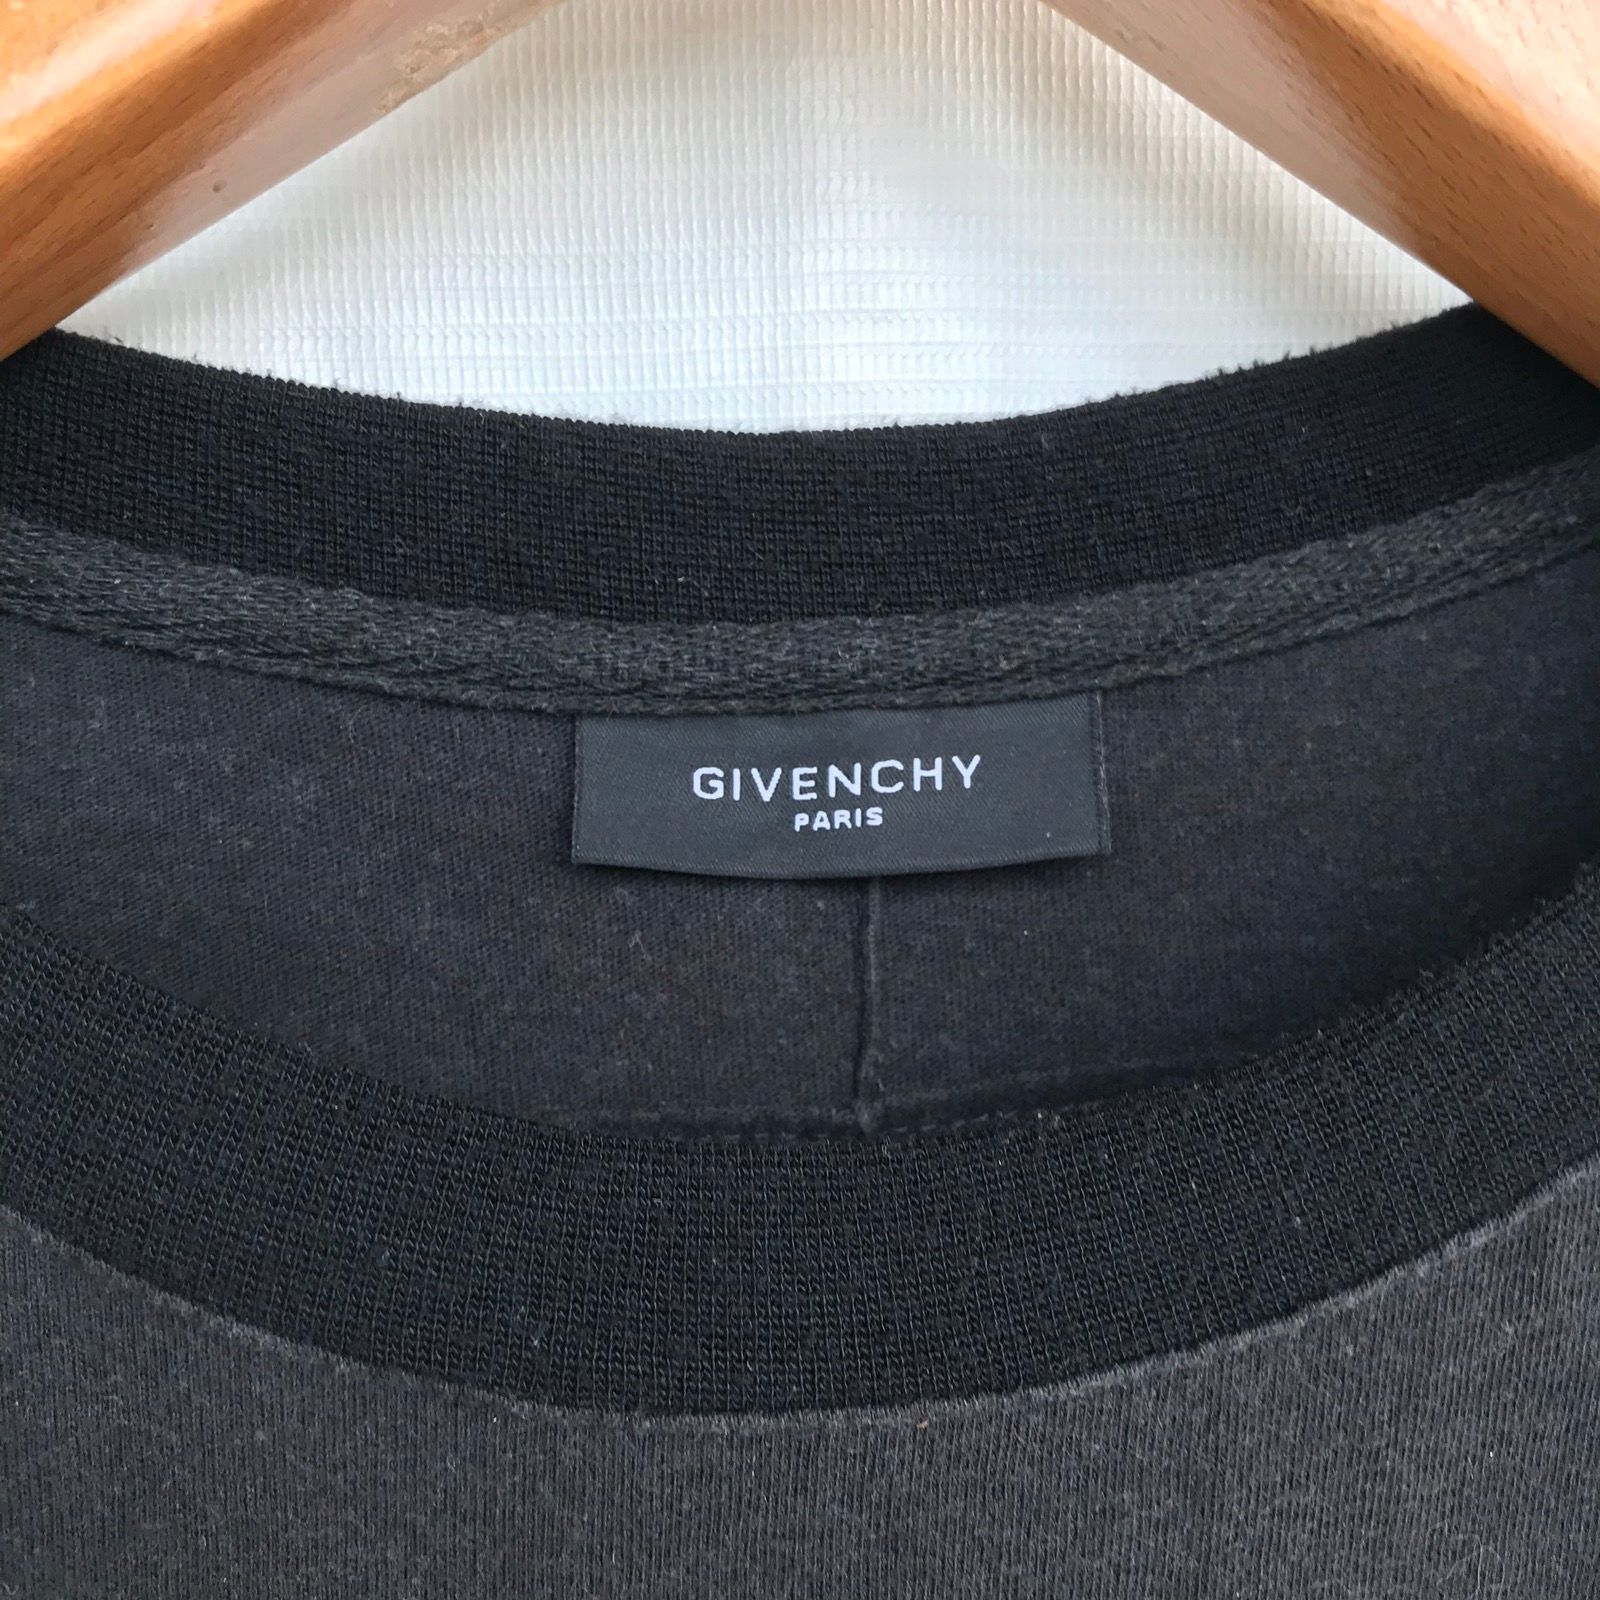 Givenchy FW11 Ricardo Tisci Dog Print T Shirt Size US M / EU 48-50 / 2 - 5 Thumbnail